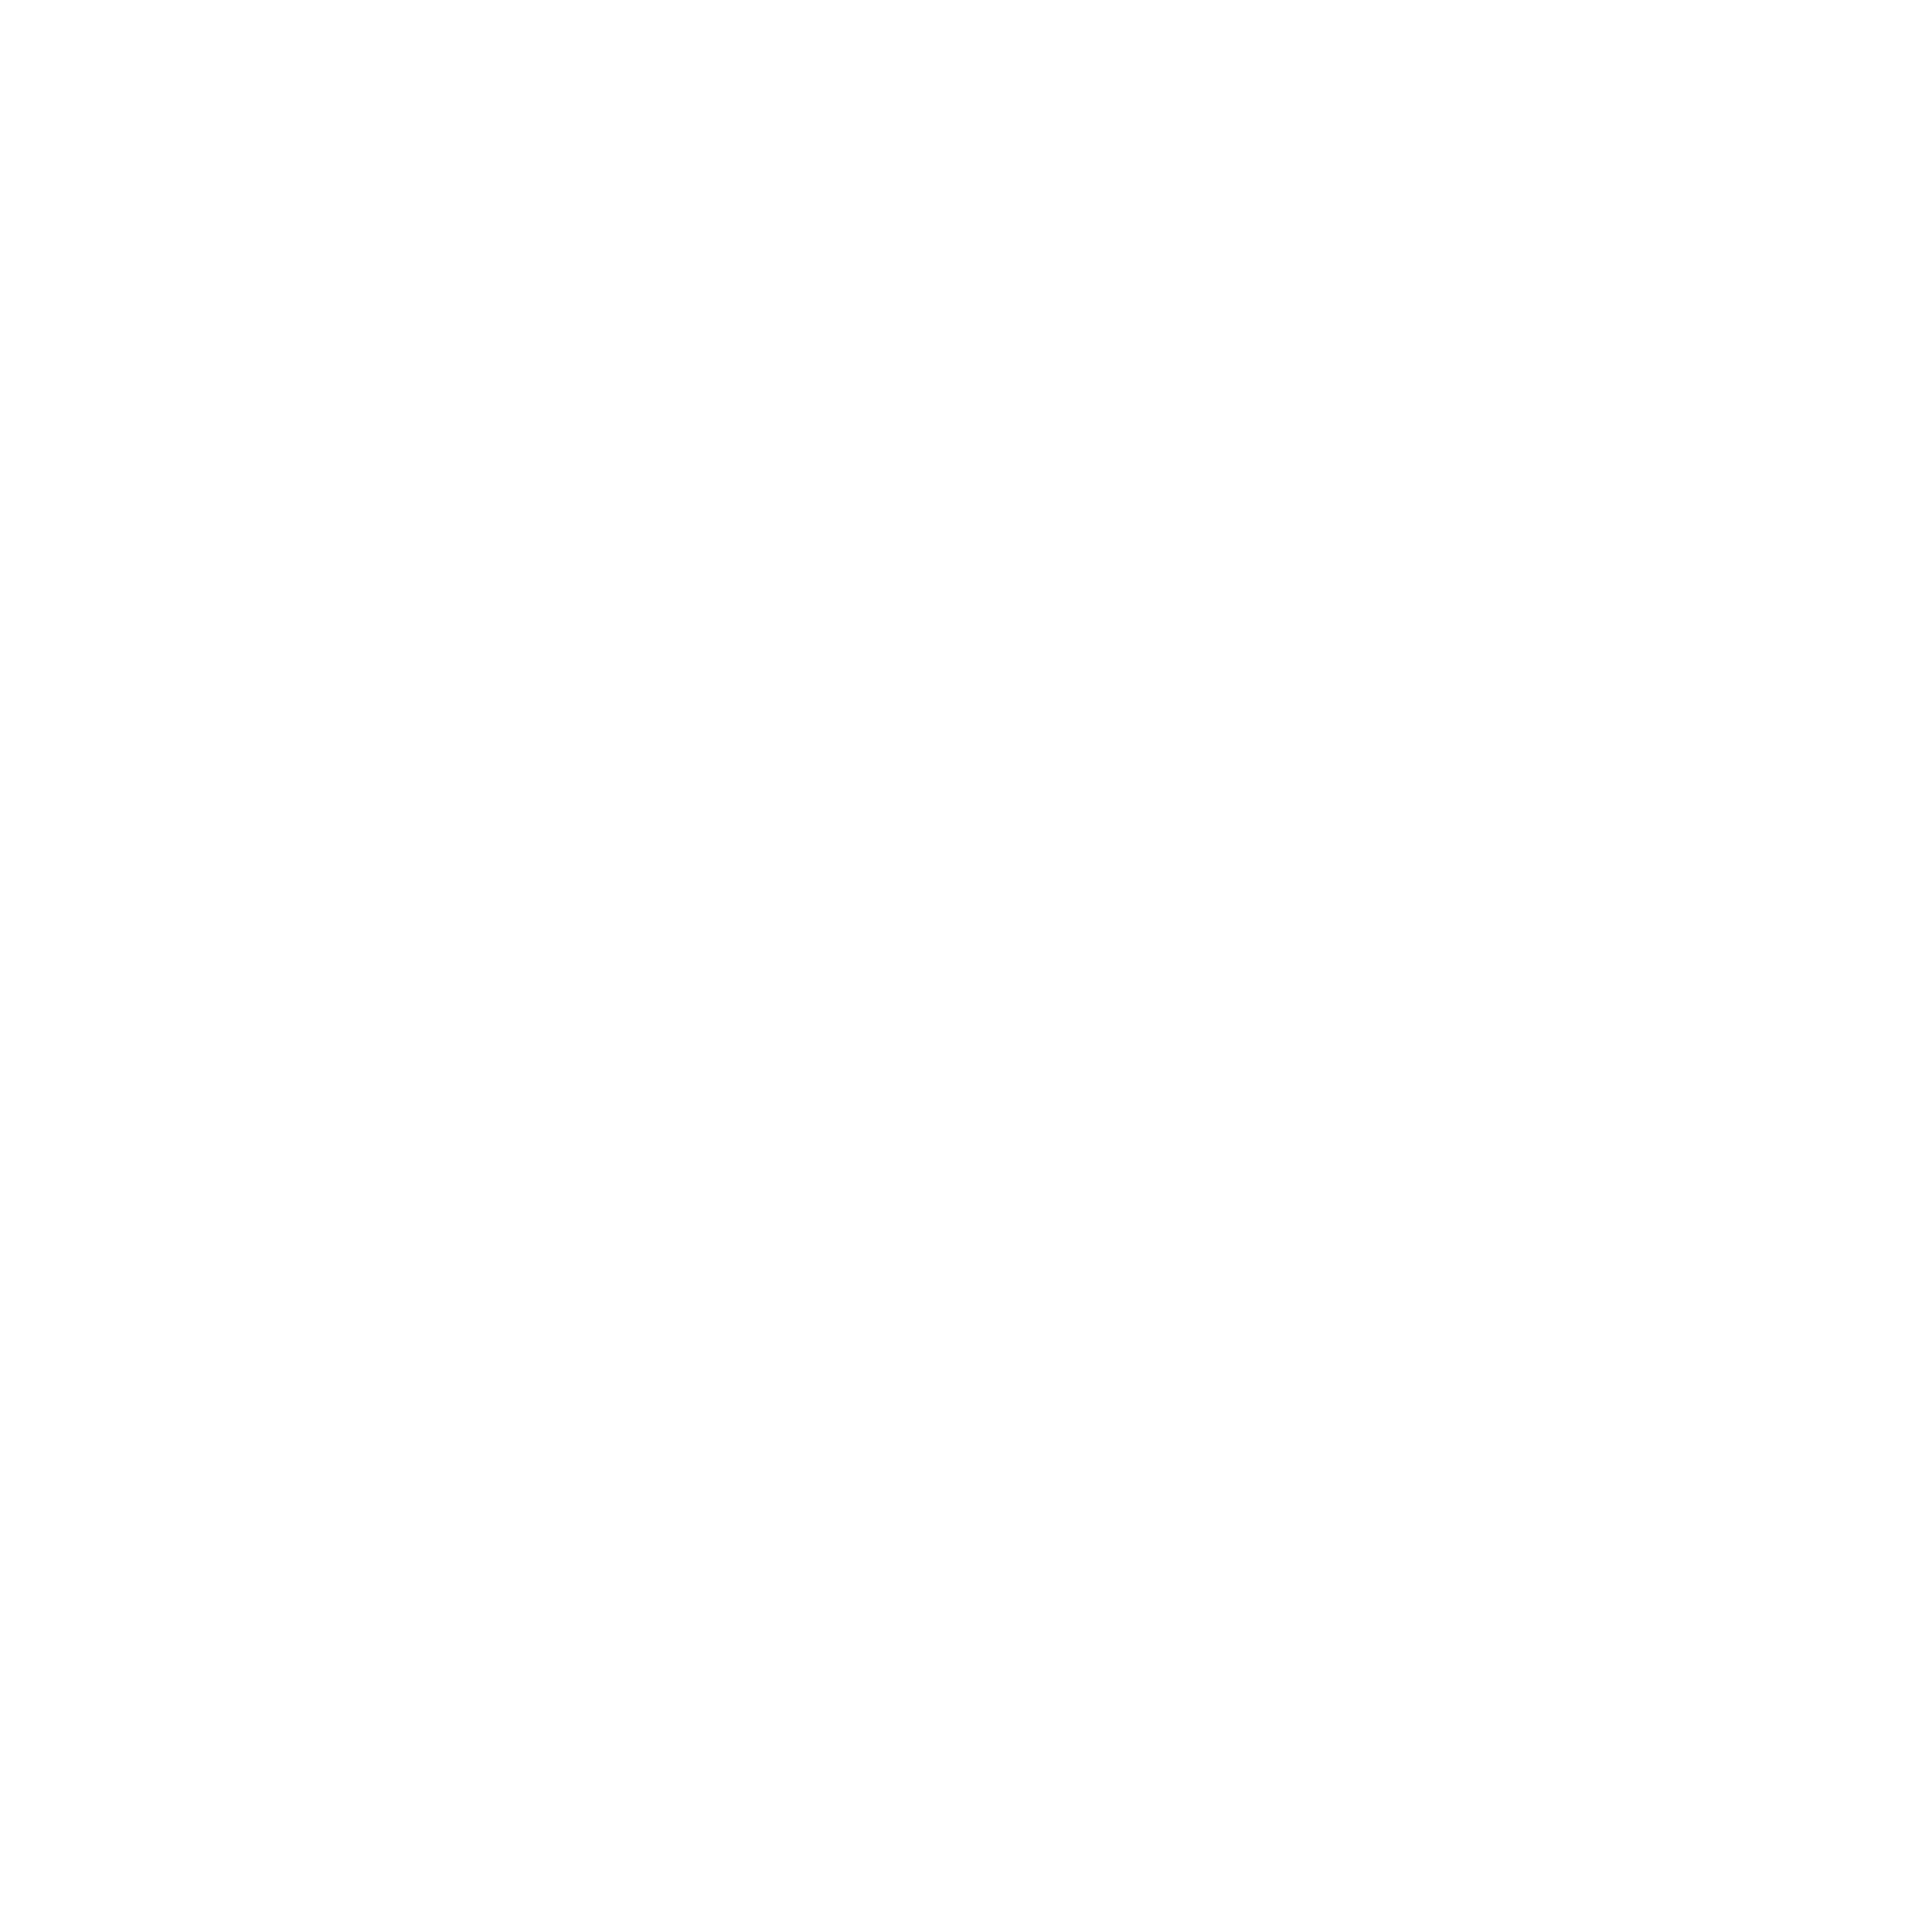 Web on demand logo in white